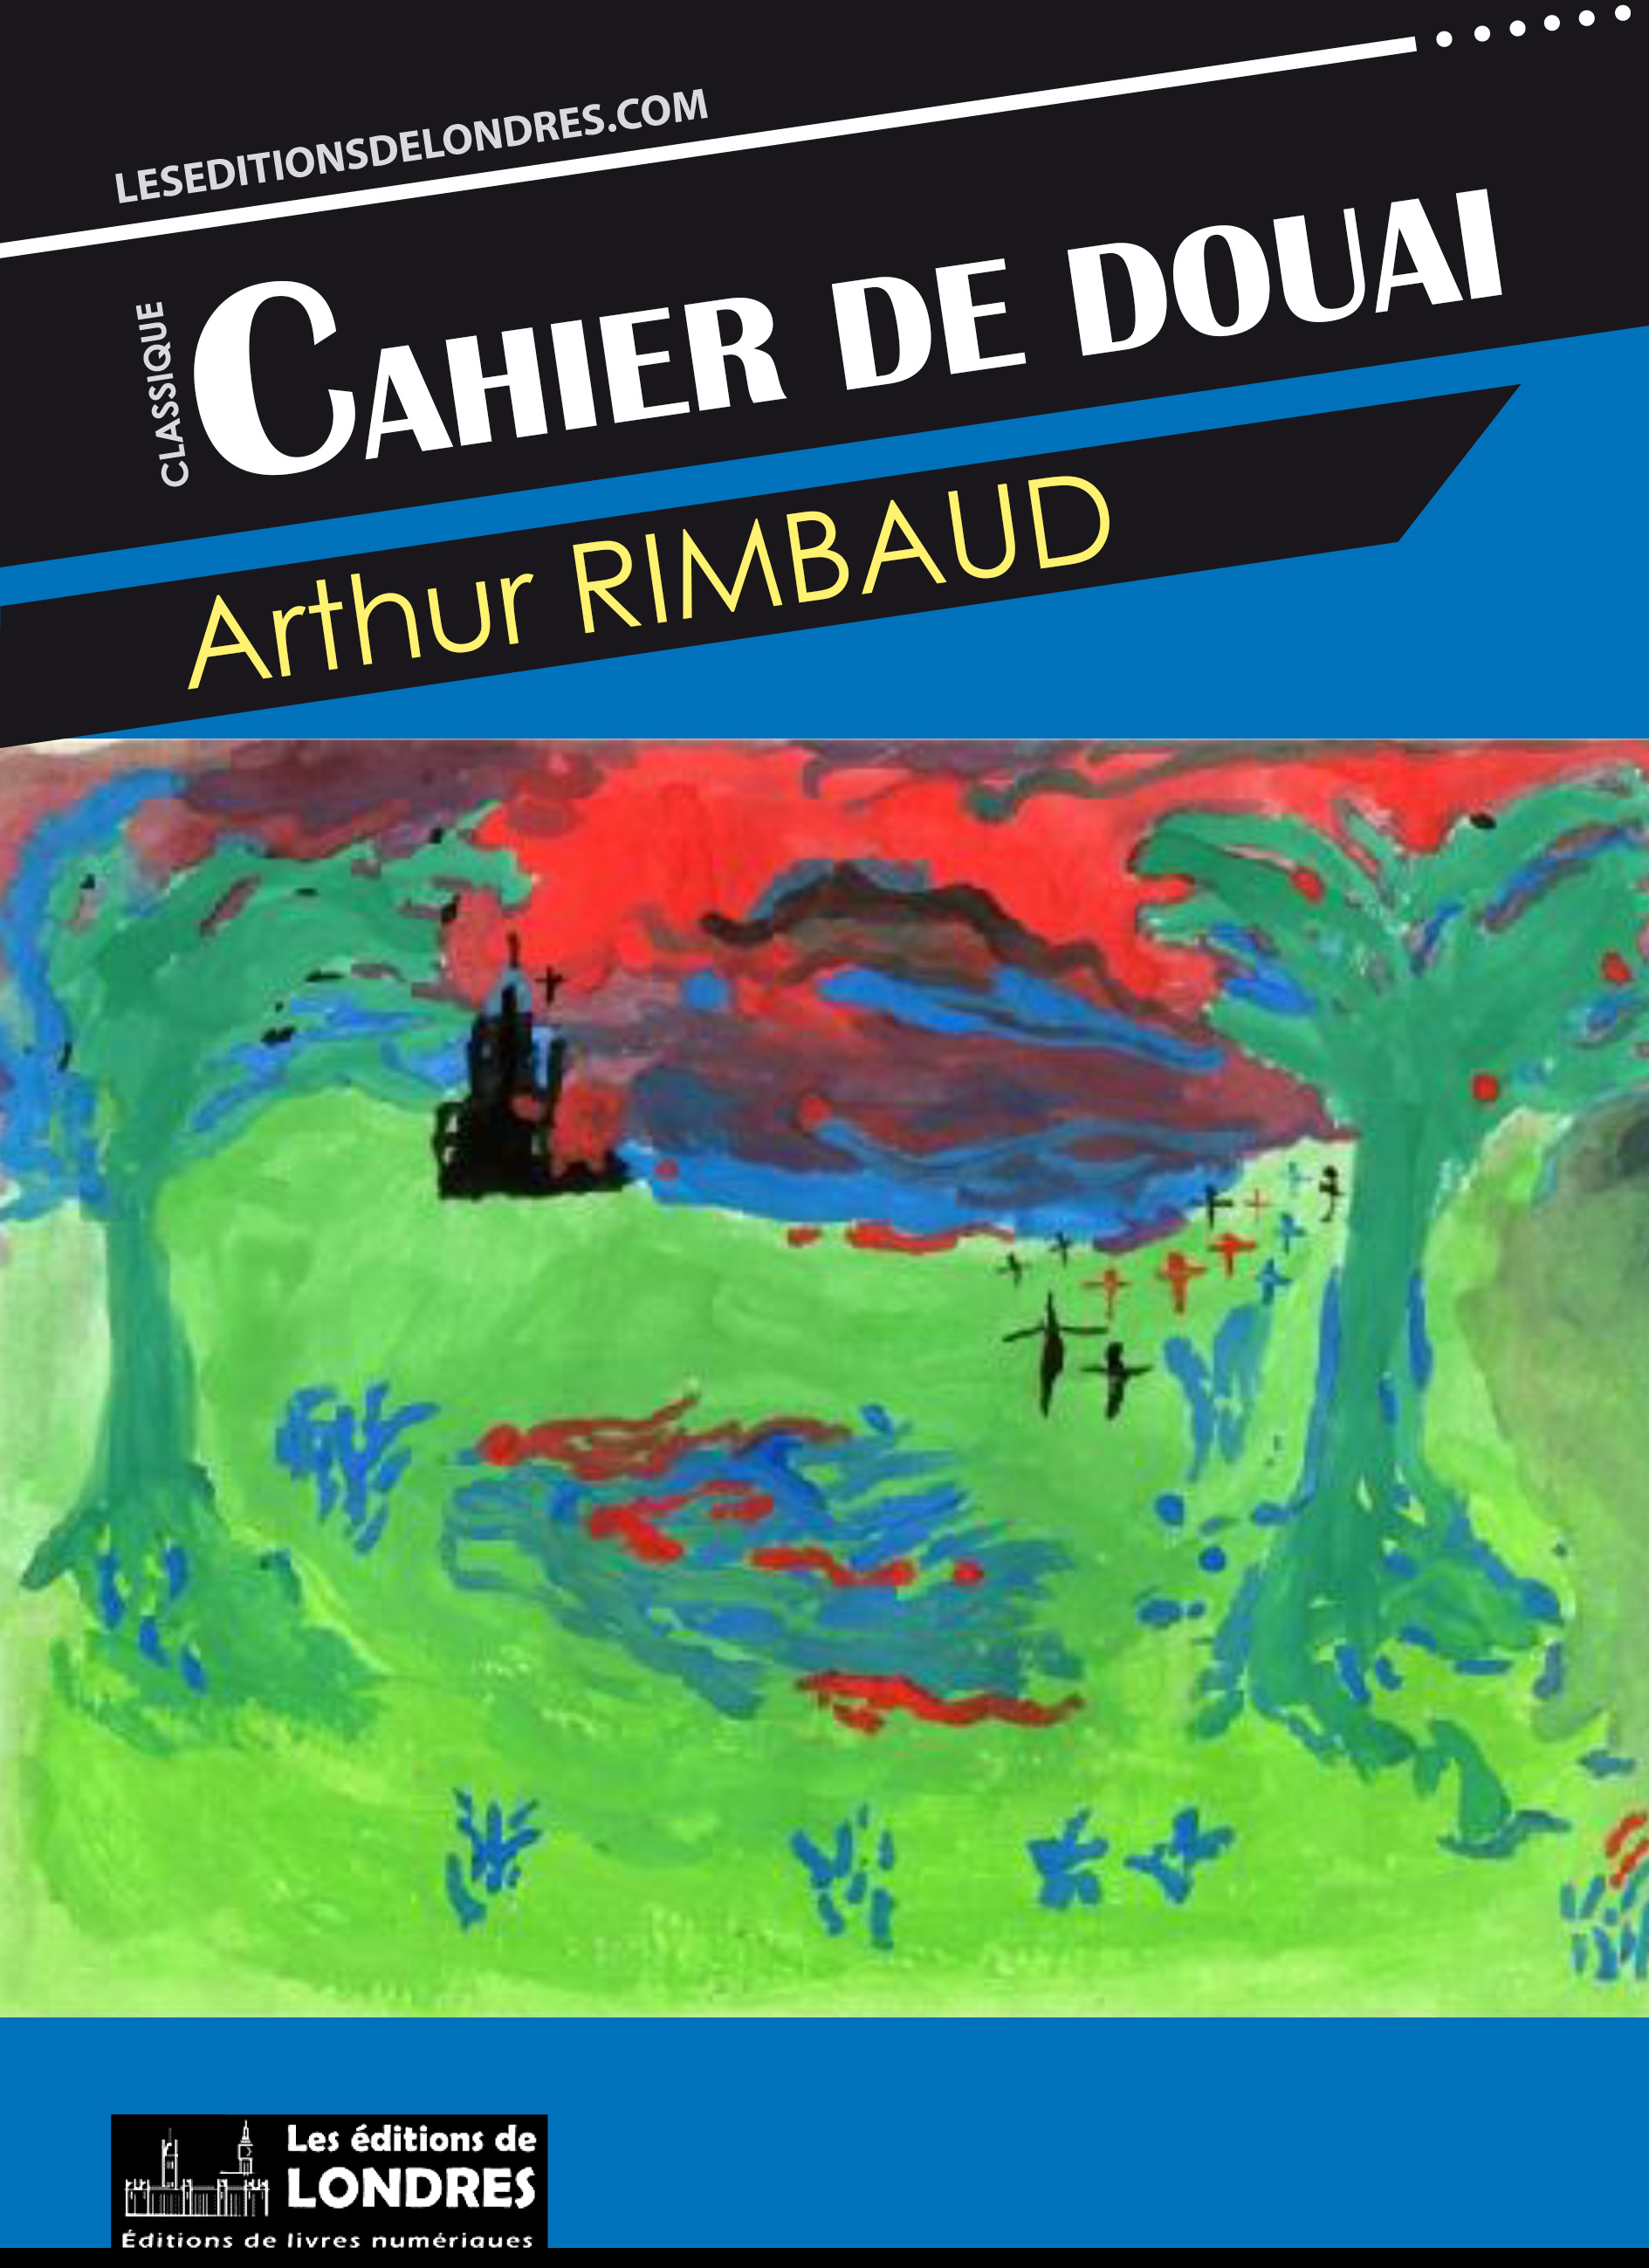 Rimbaud, Cahiers de Douai.